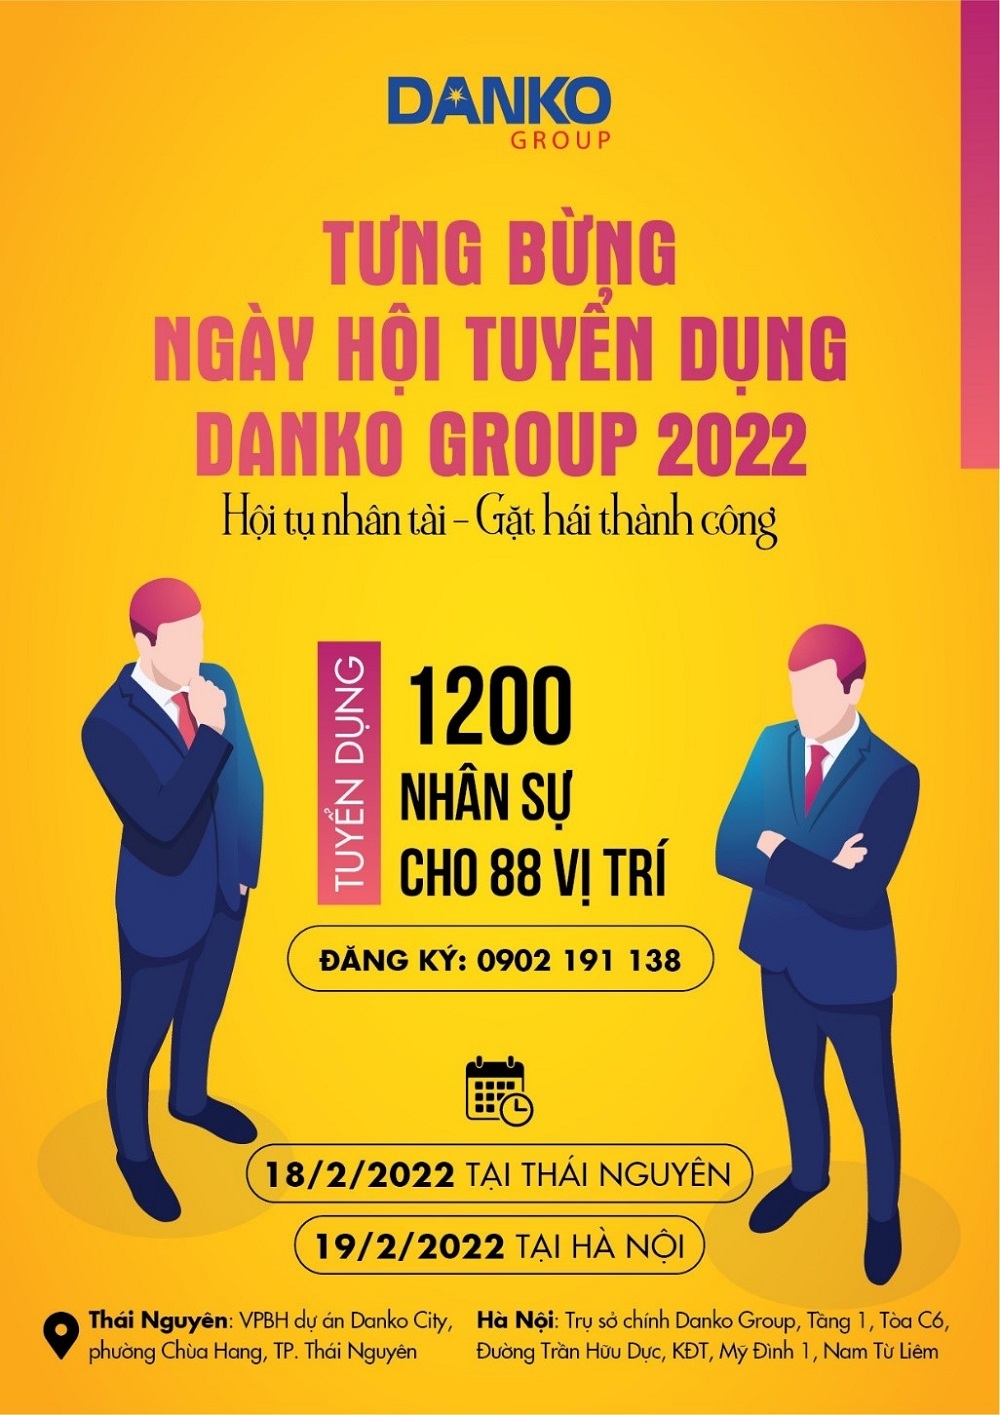 1200 co hoi viec lam tai ngay hoi tuyen dung 2022 cua danko group